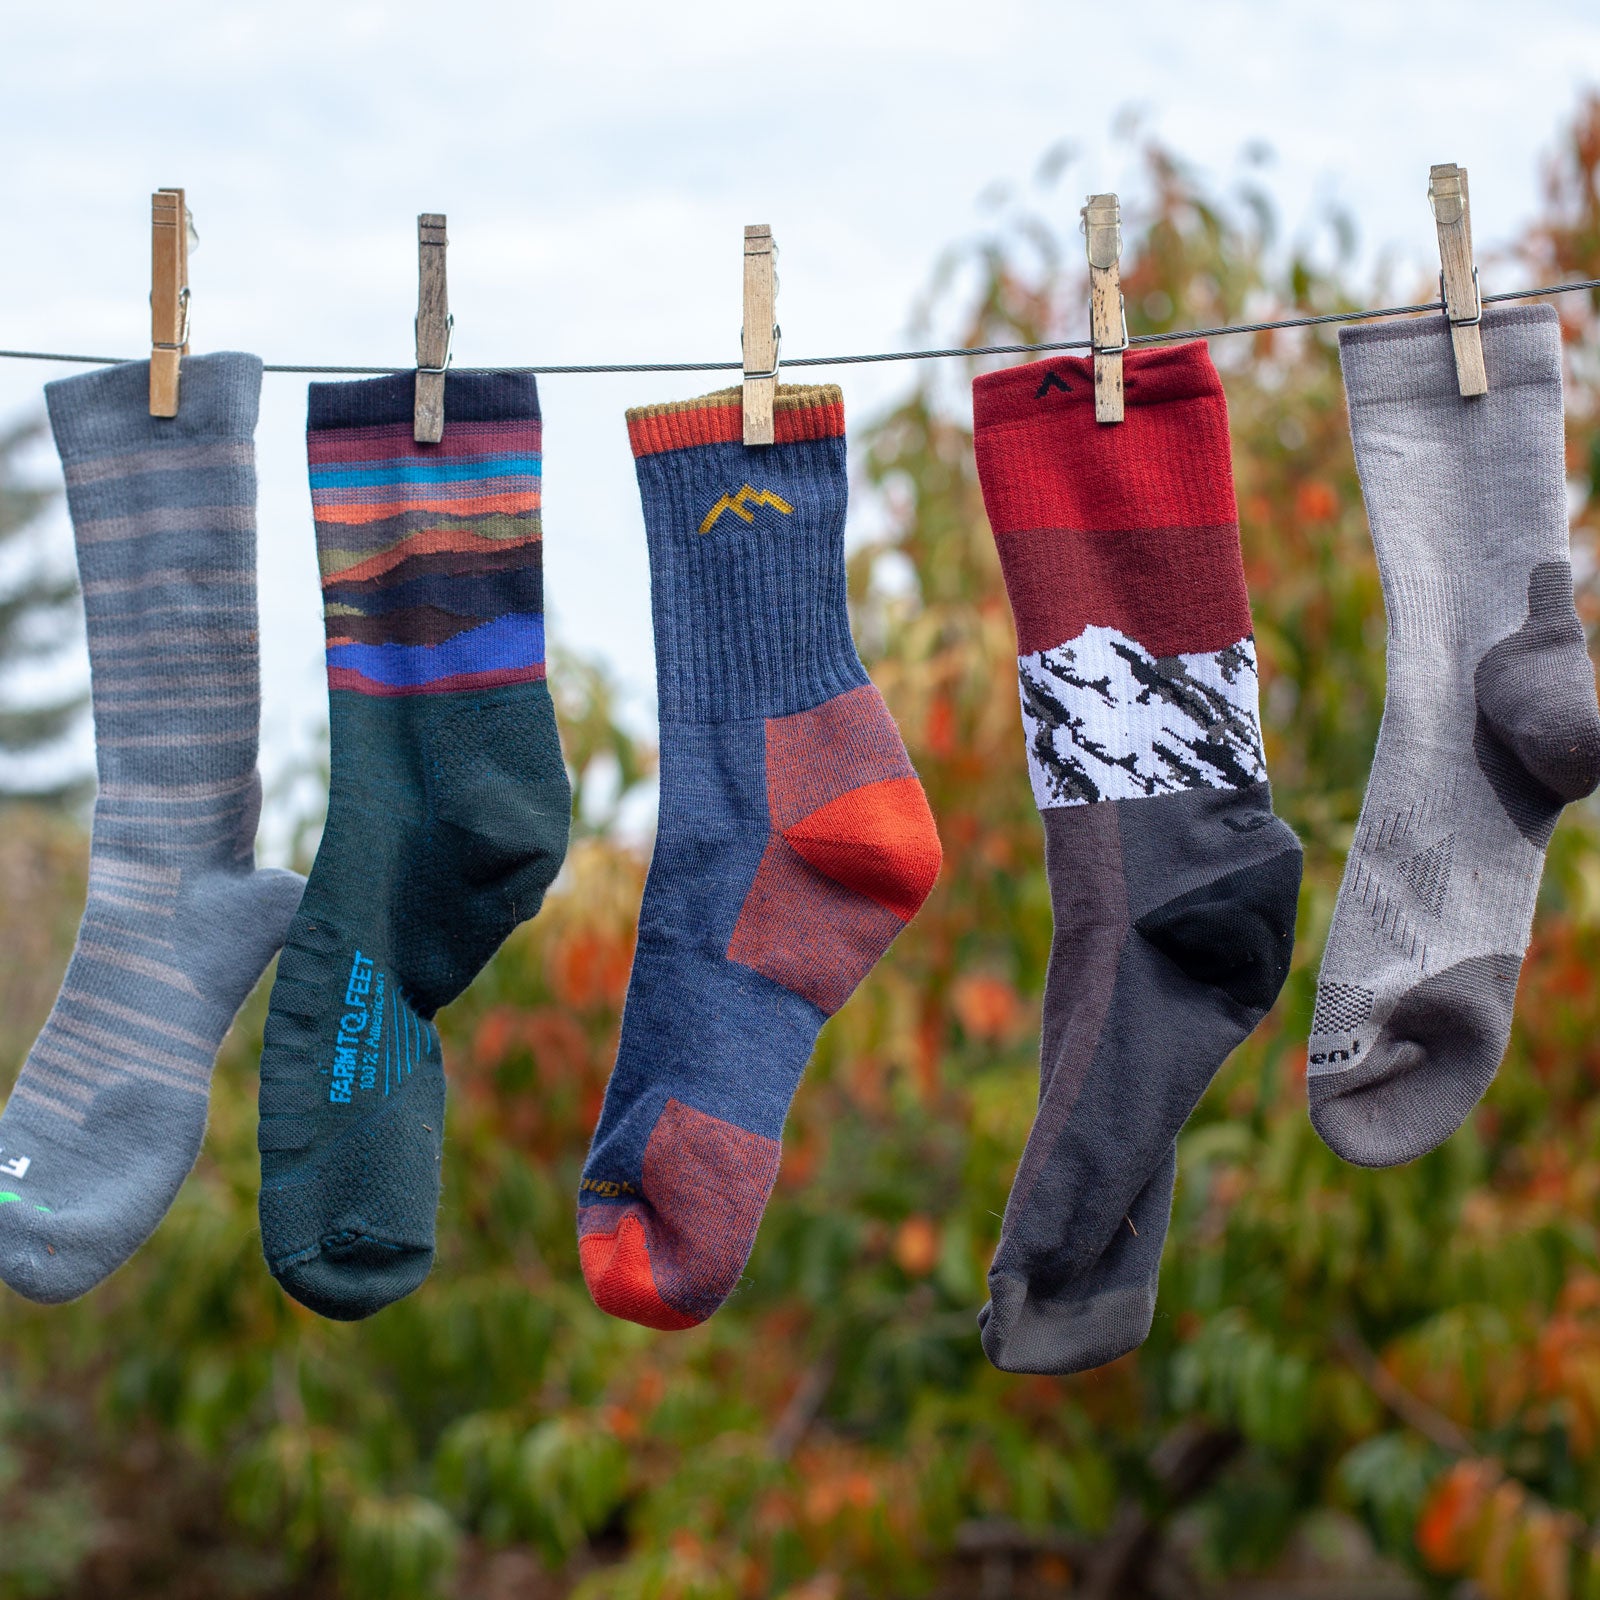 How do you choose your hiking socks ?